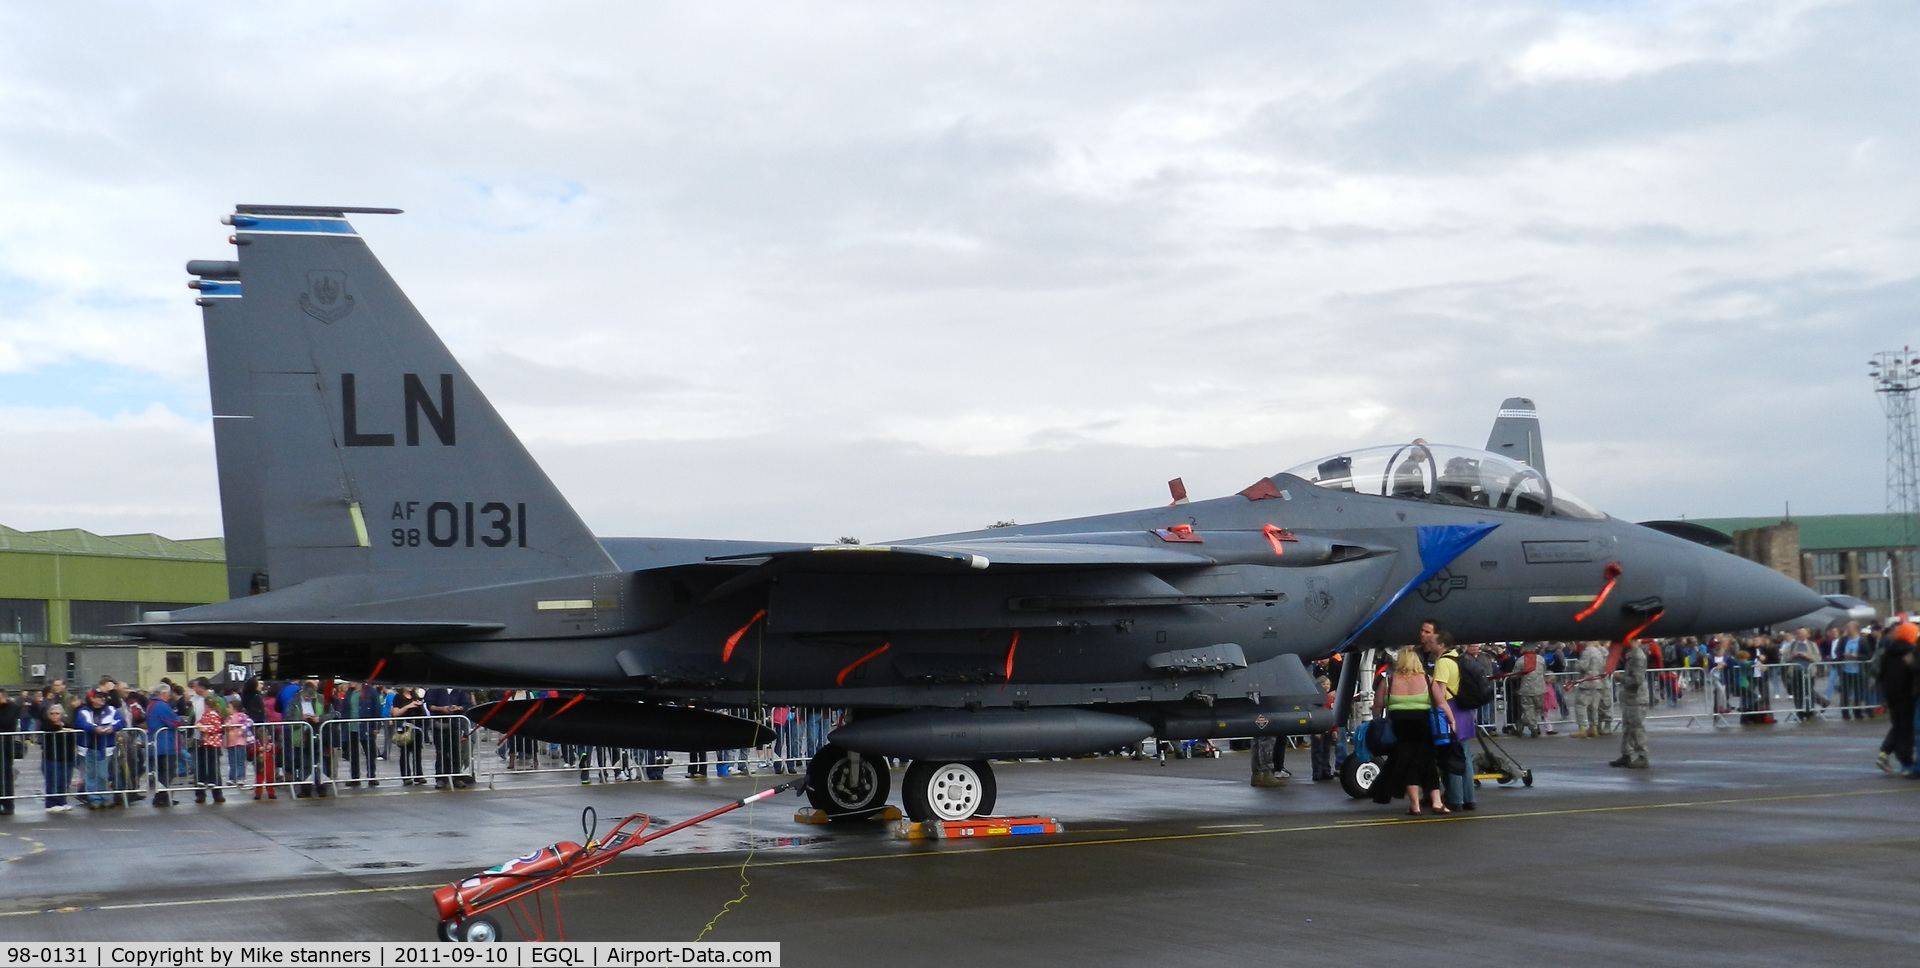 98-0131, 1998 McDonnell Douglas F-15E Strike Eagle C/N 1361/E222, 492FS Strike eagle carrying 3x MXU-648 Baggage pods